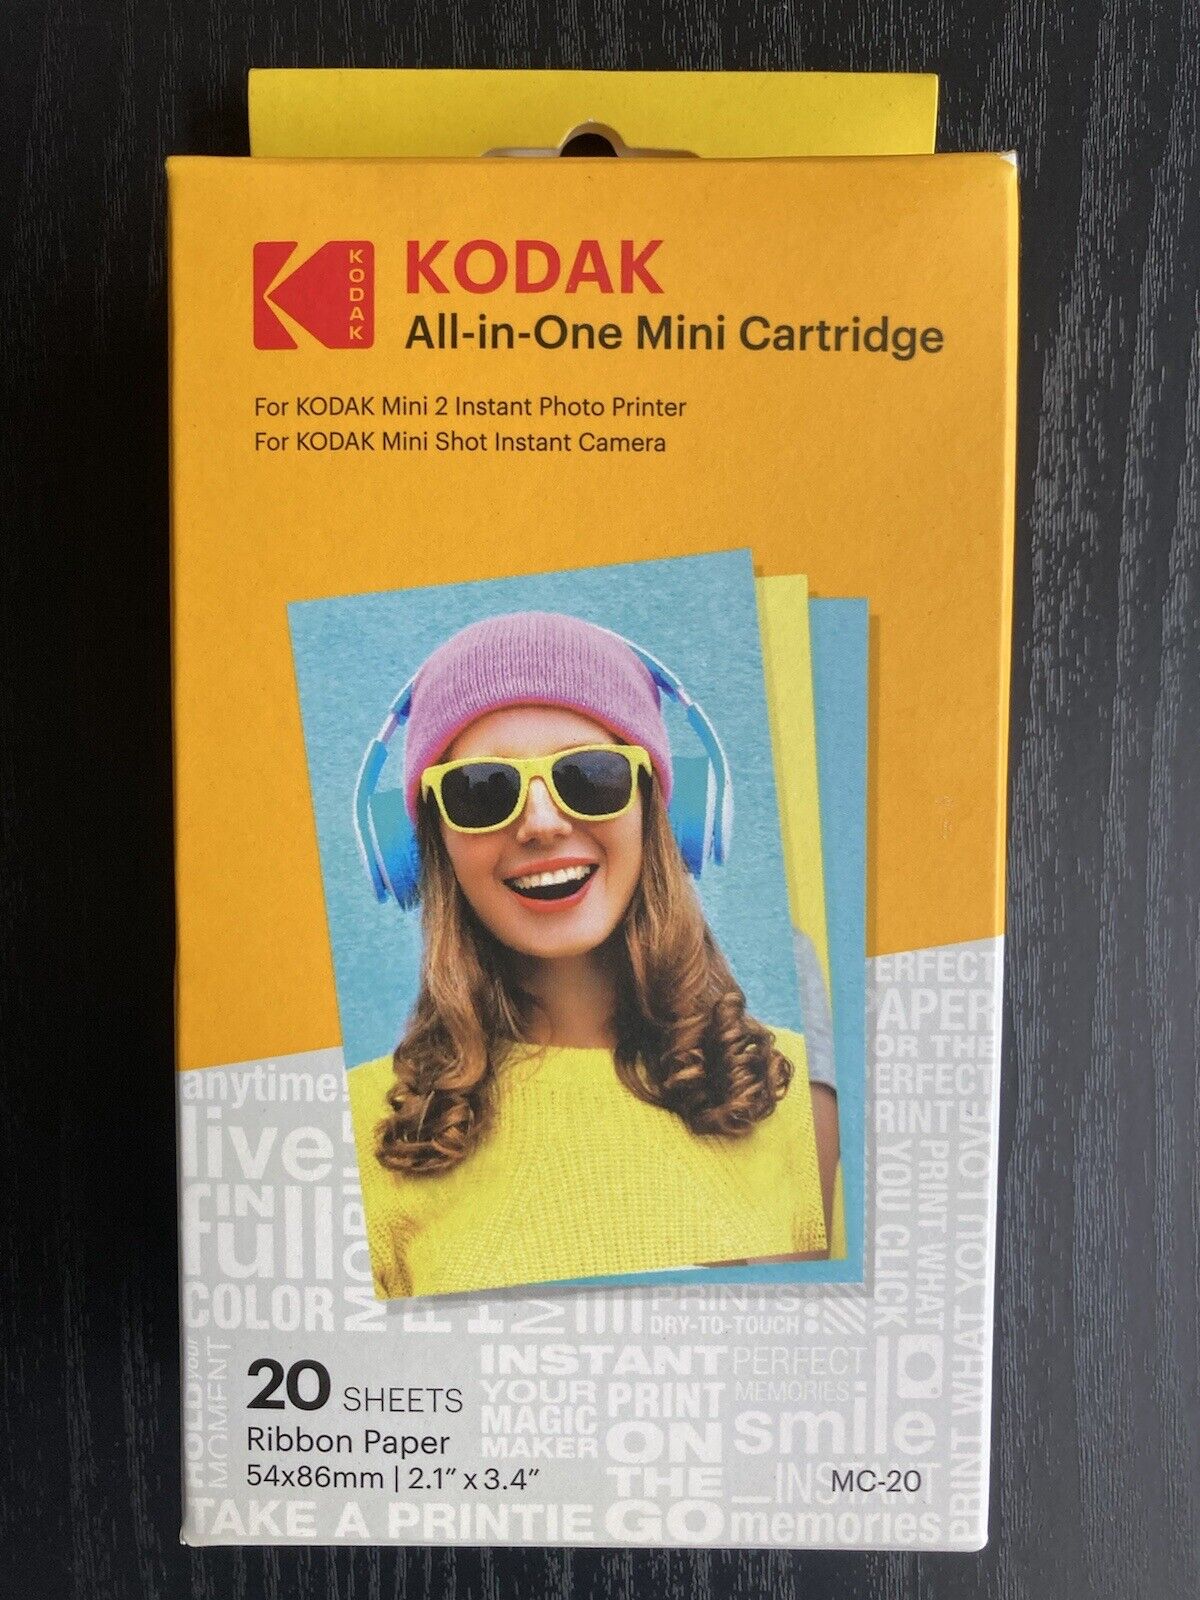 Kodak All In One Mini Cartridge 20 Sheets Ribbon Paper MC-20 Instant Photo Paper